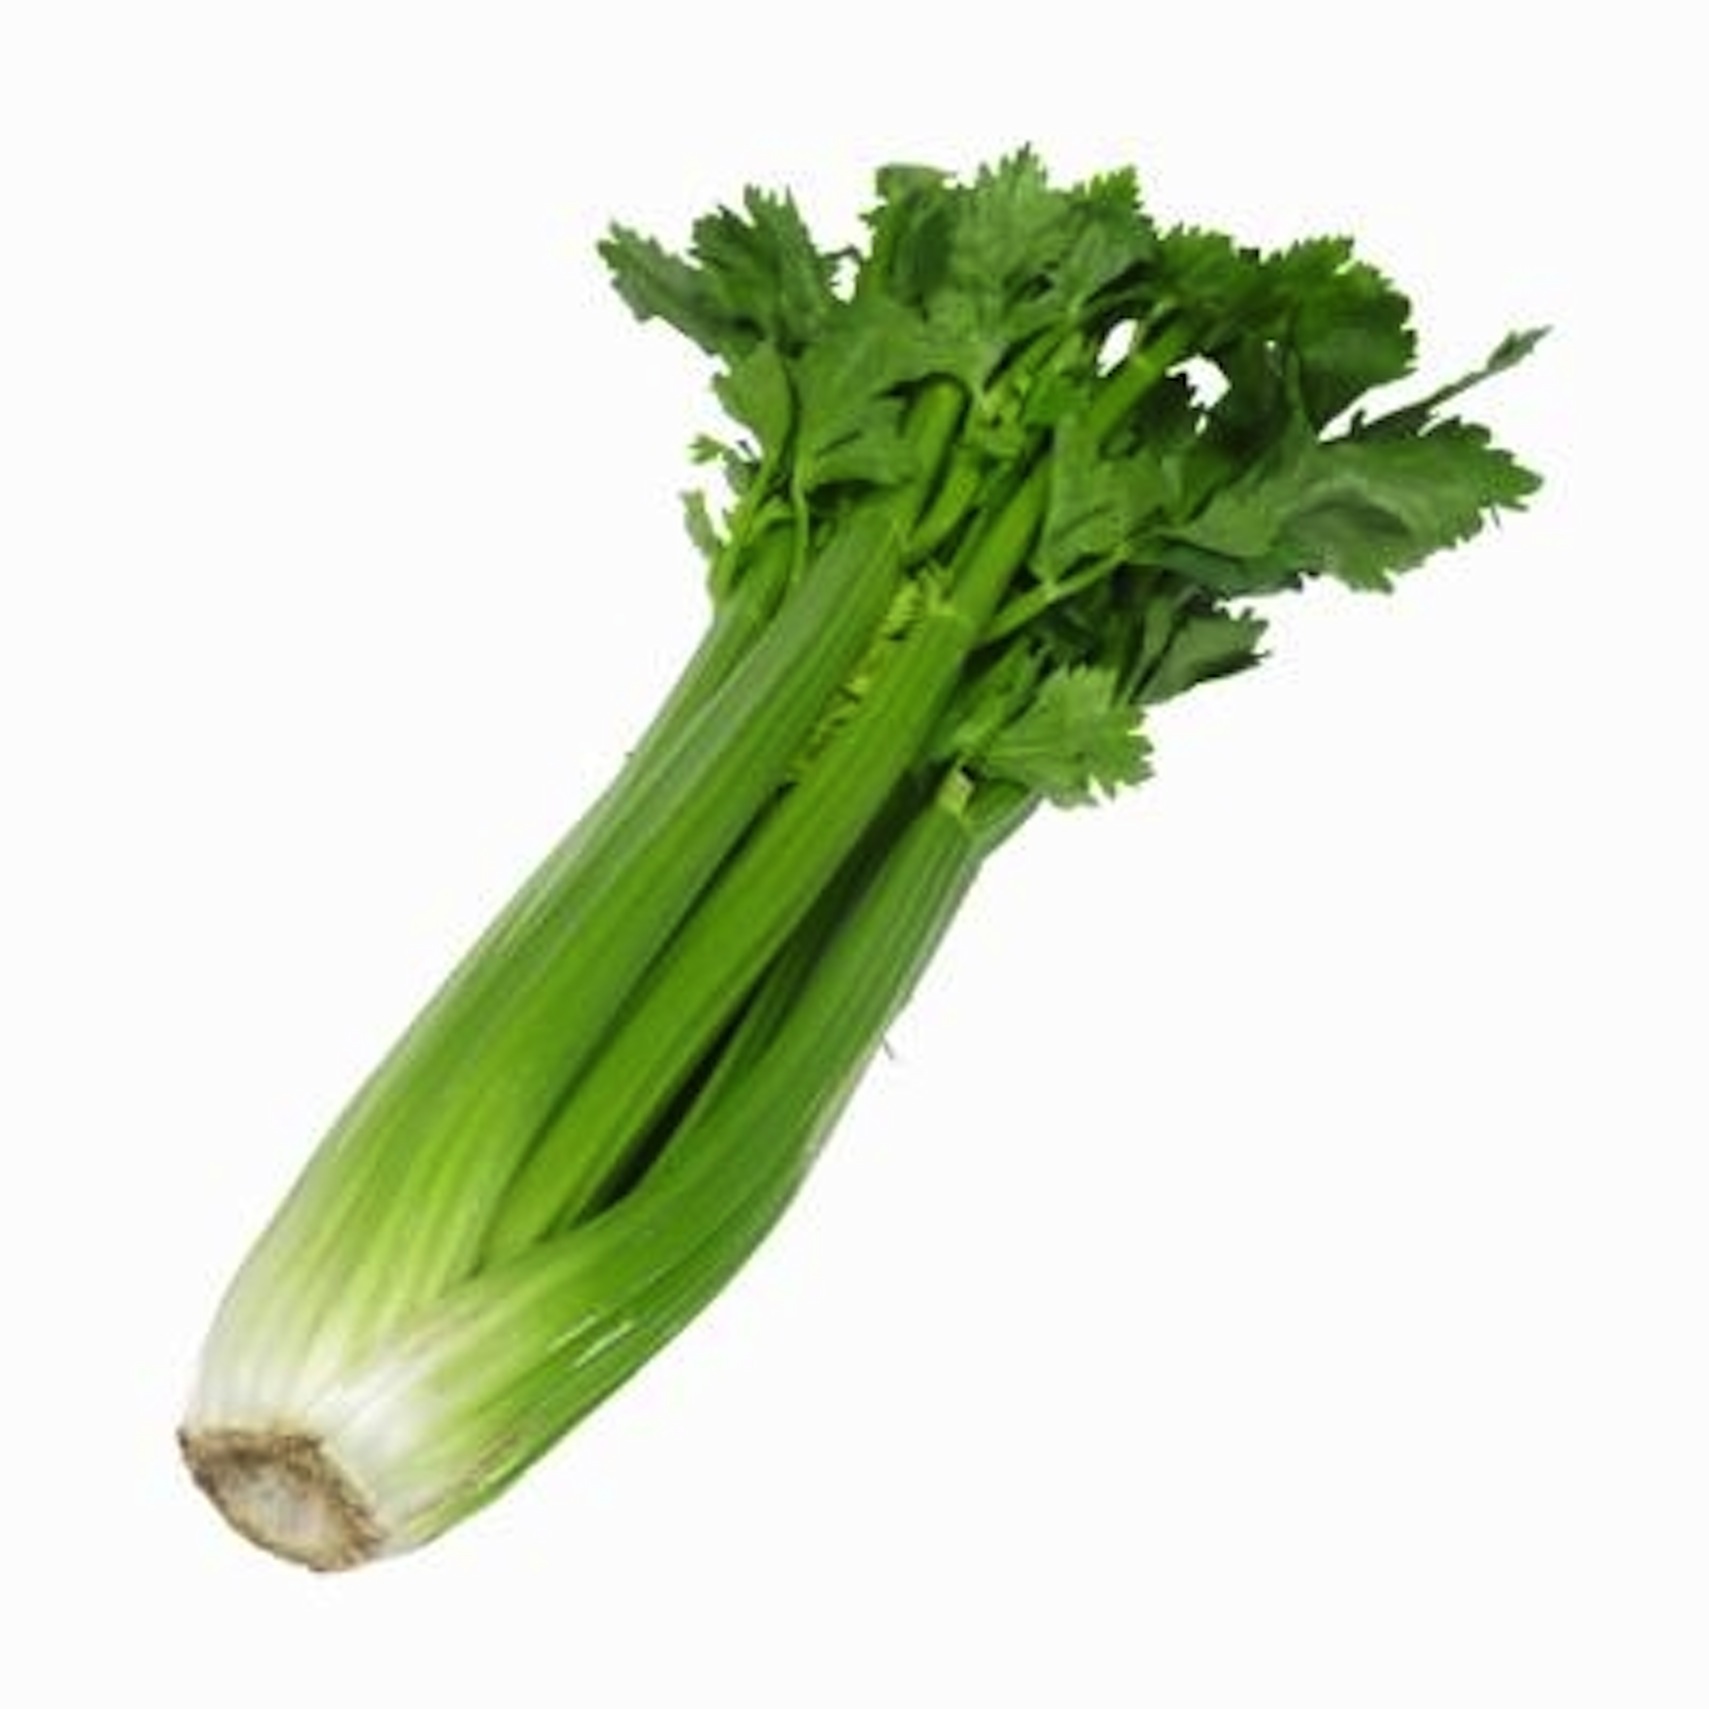 for glowing skin - celery . - Celery Clipart